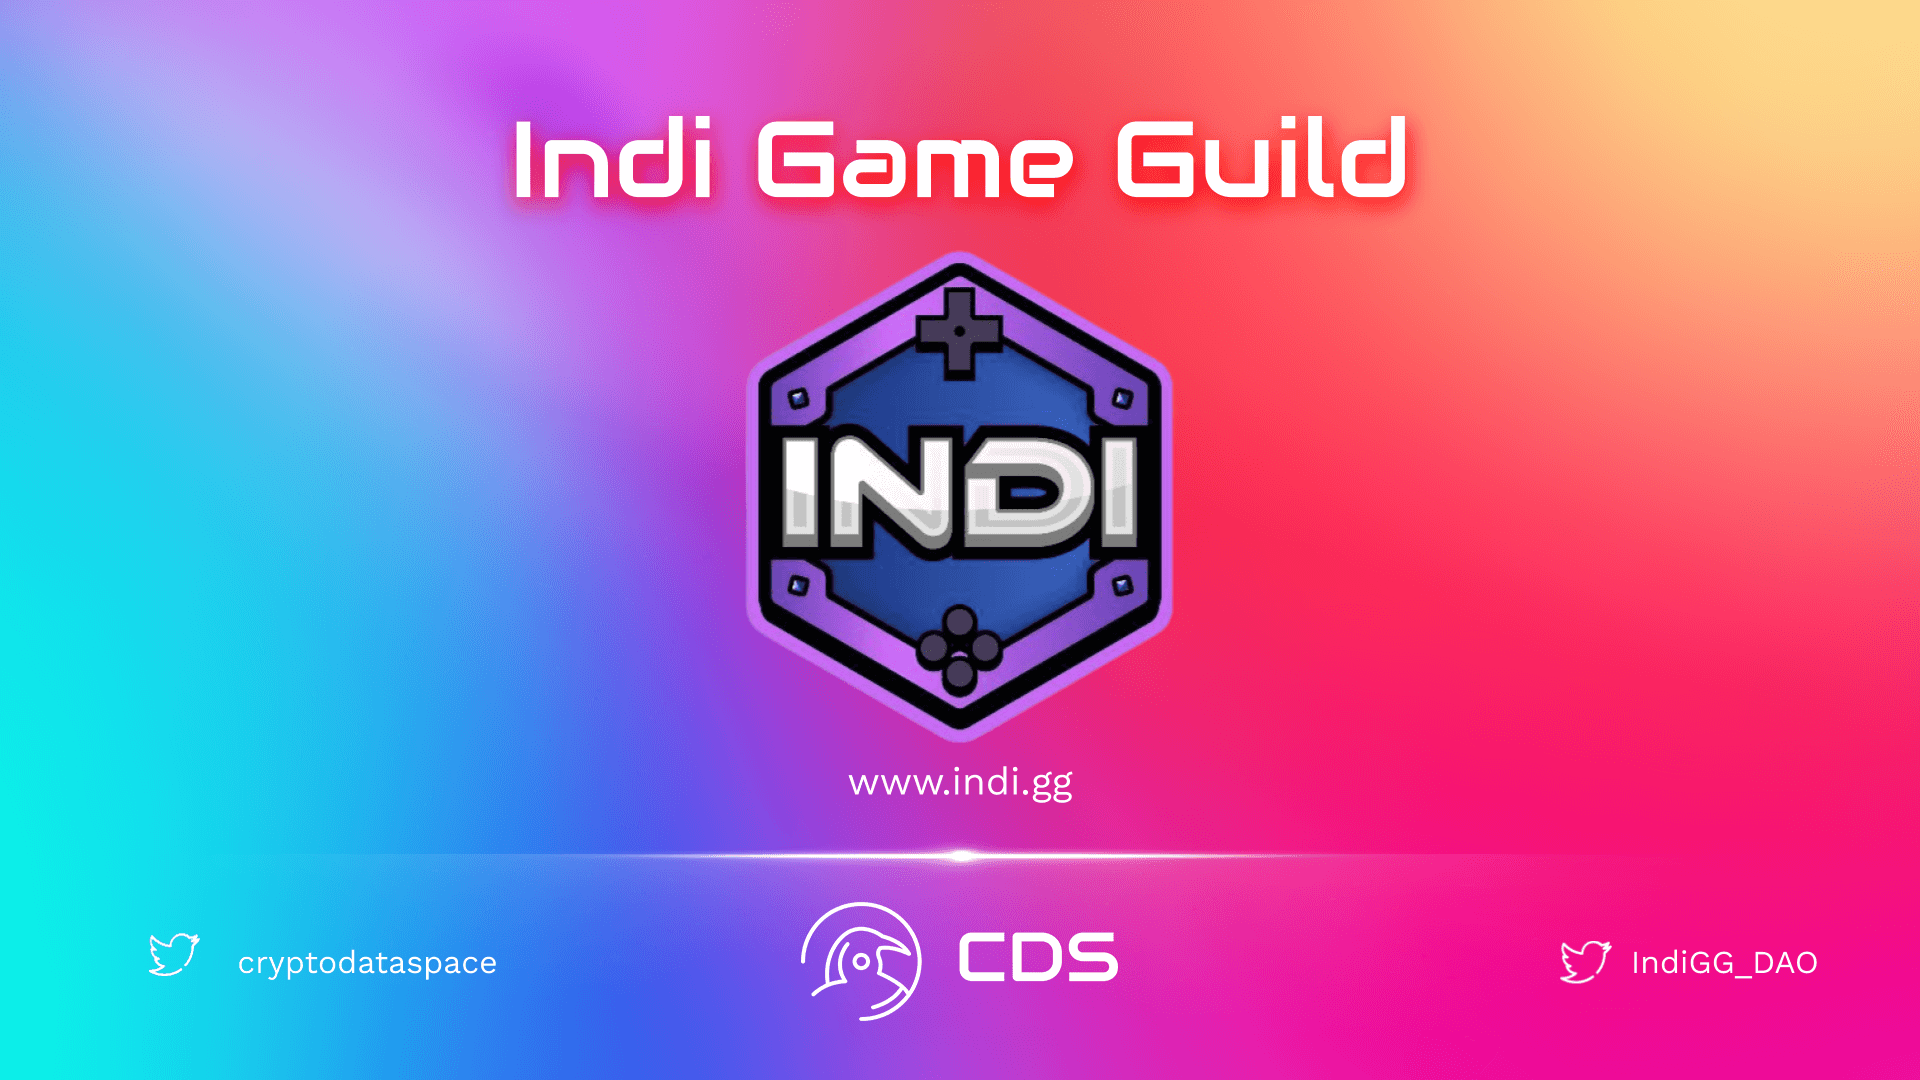 indi game guild